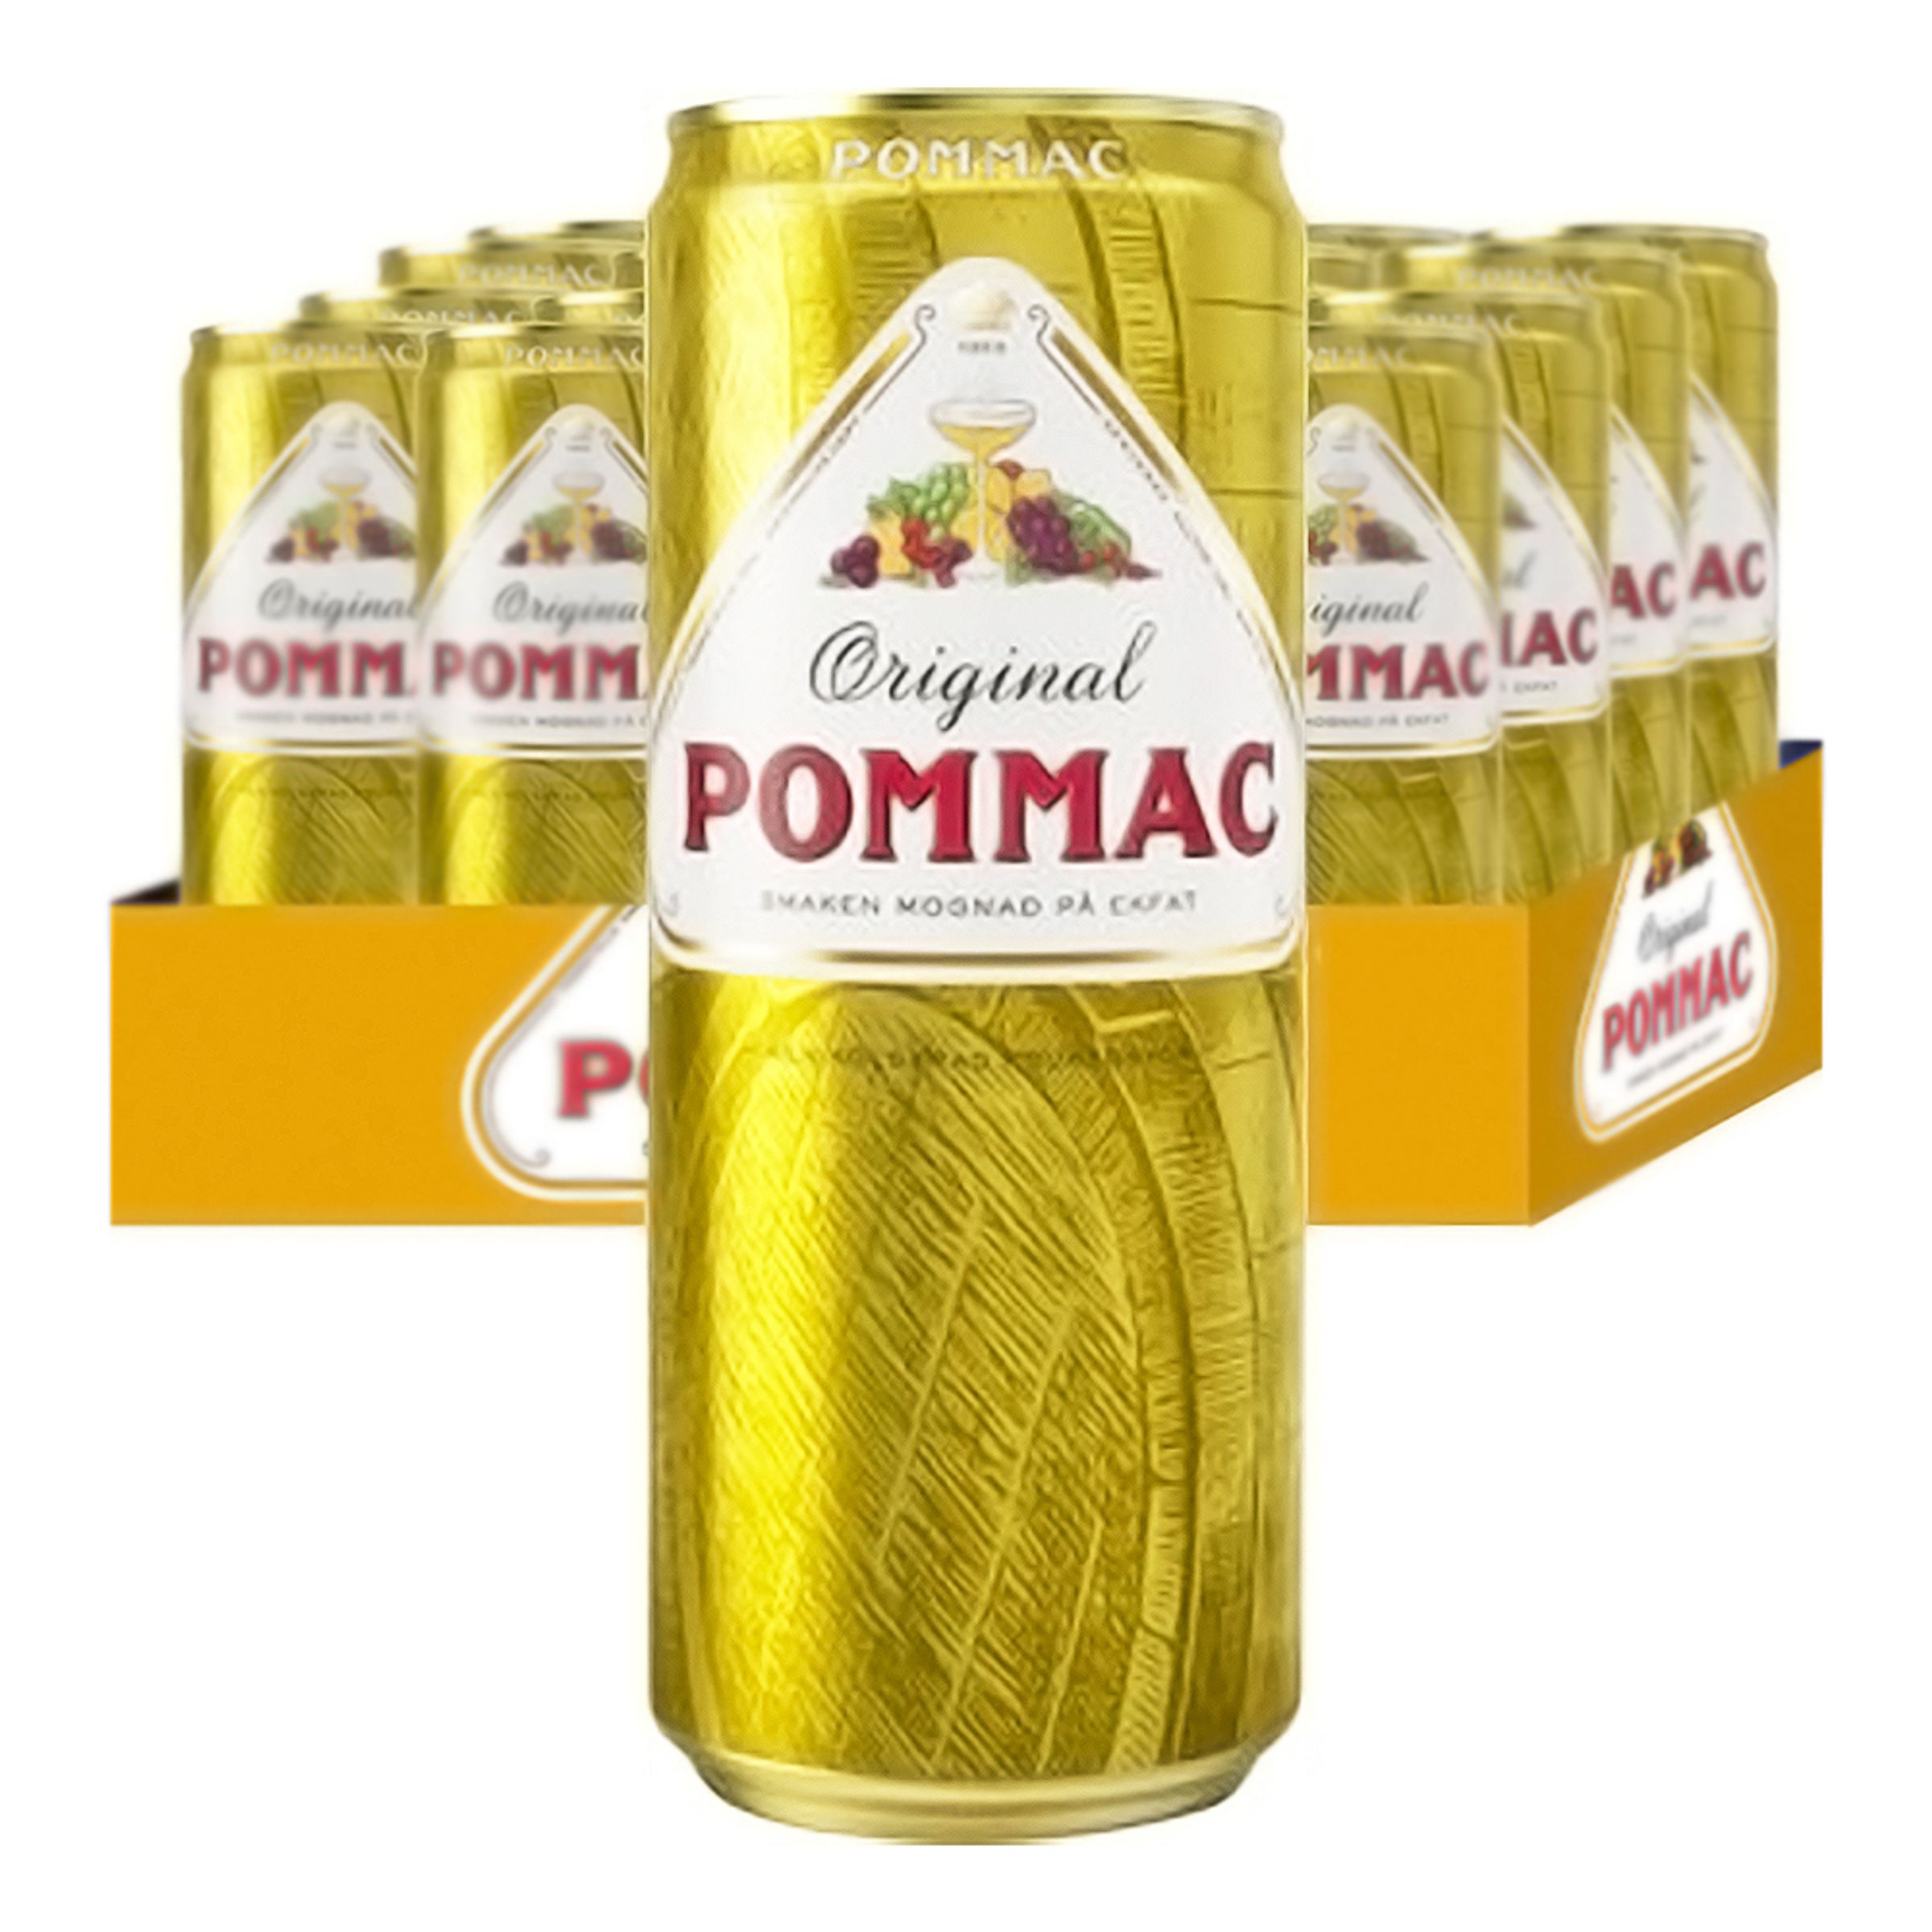 Pommac Original - 20-pack